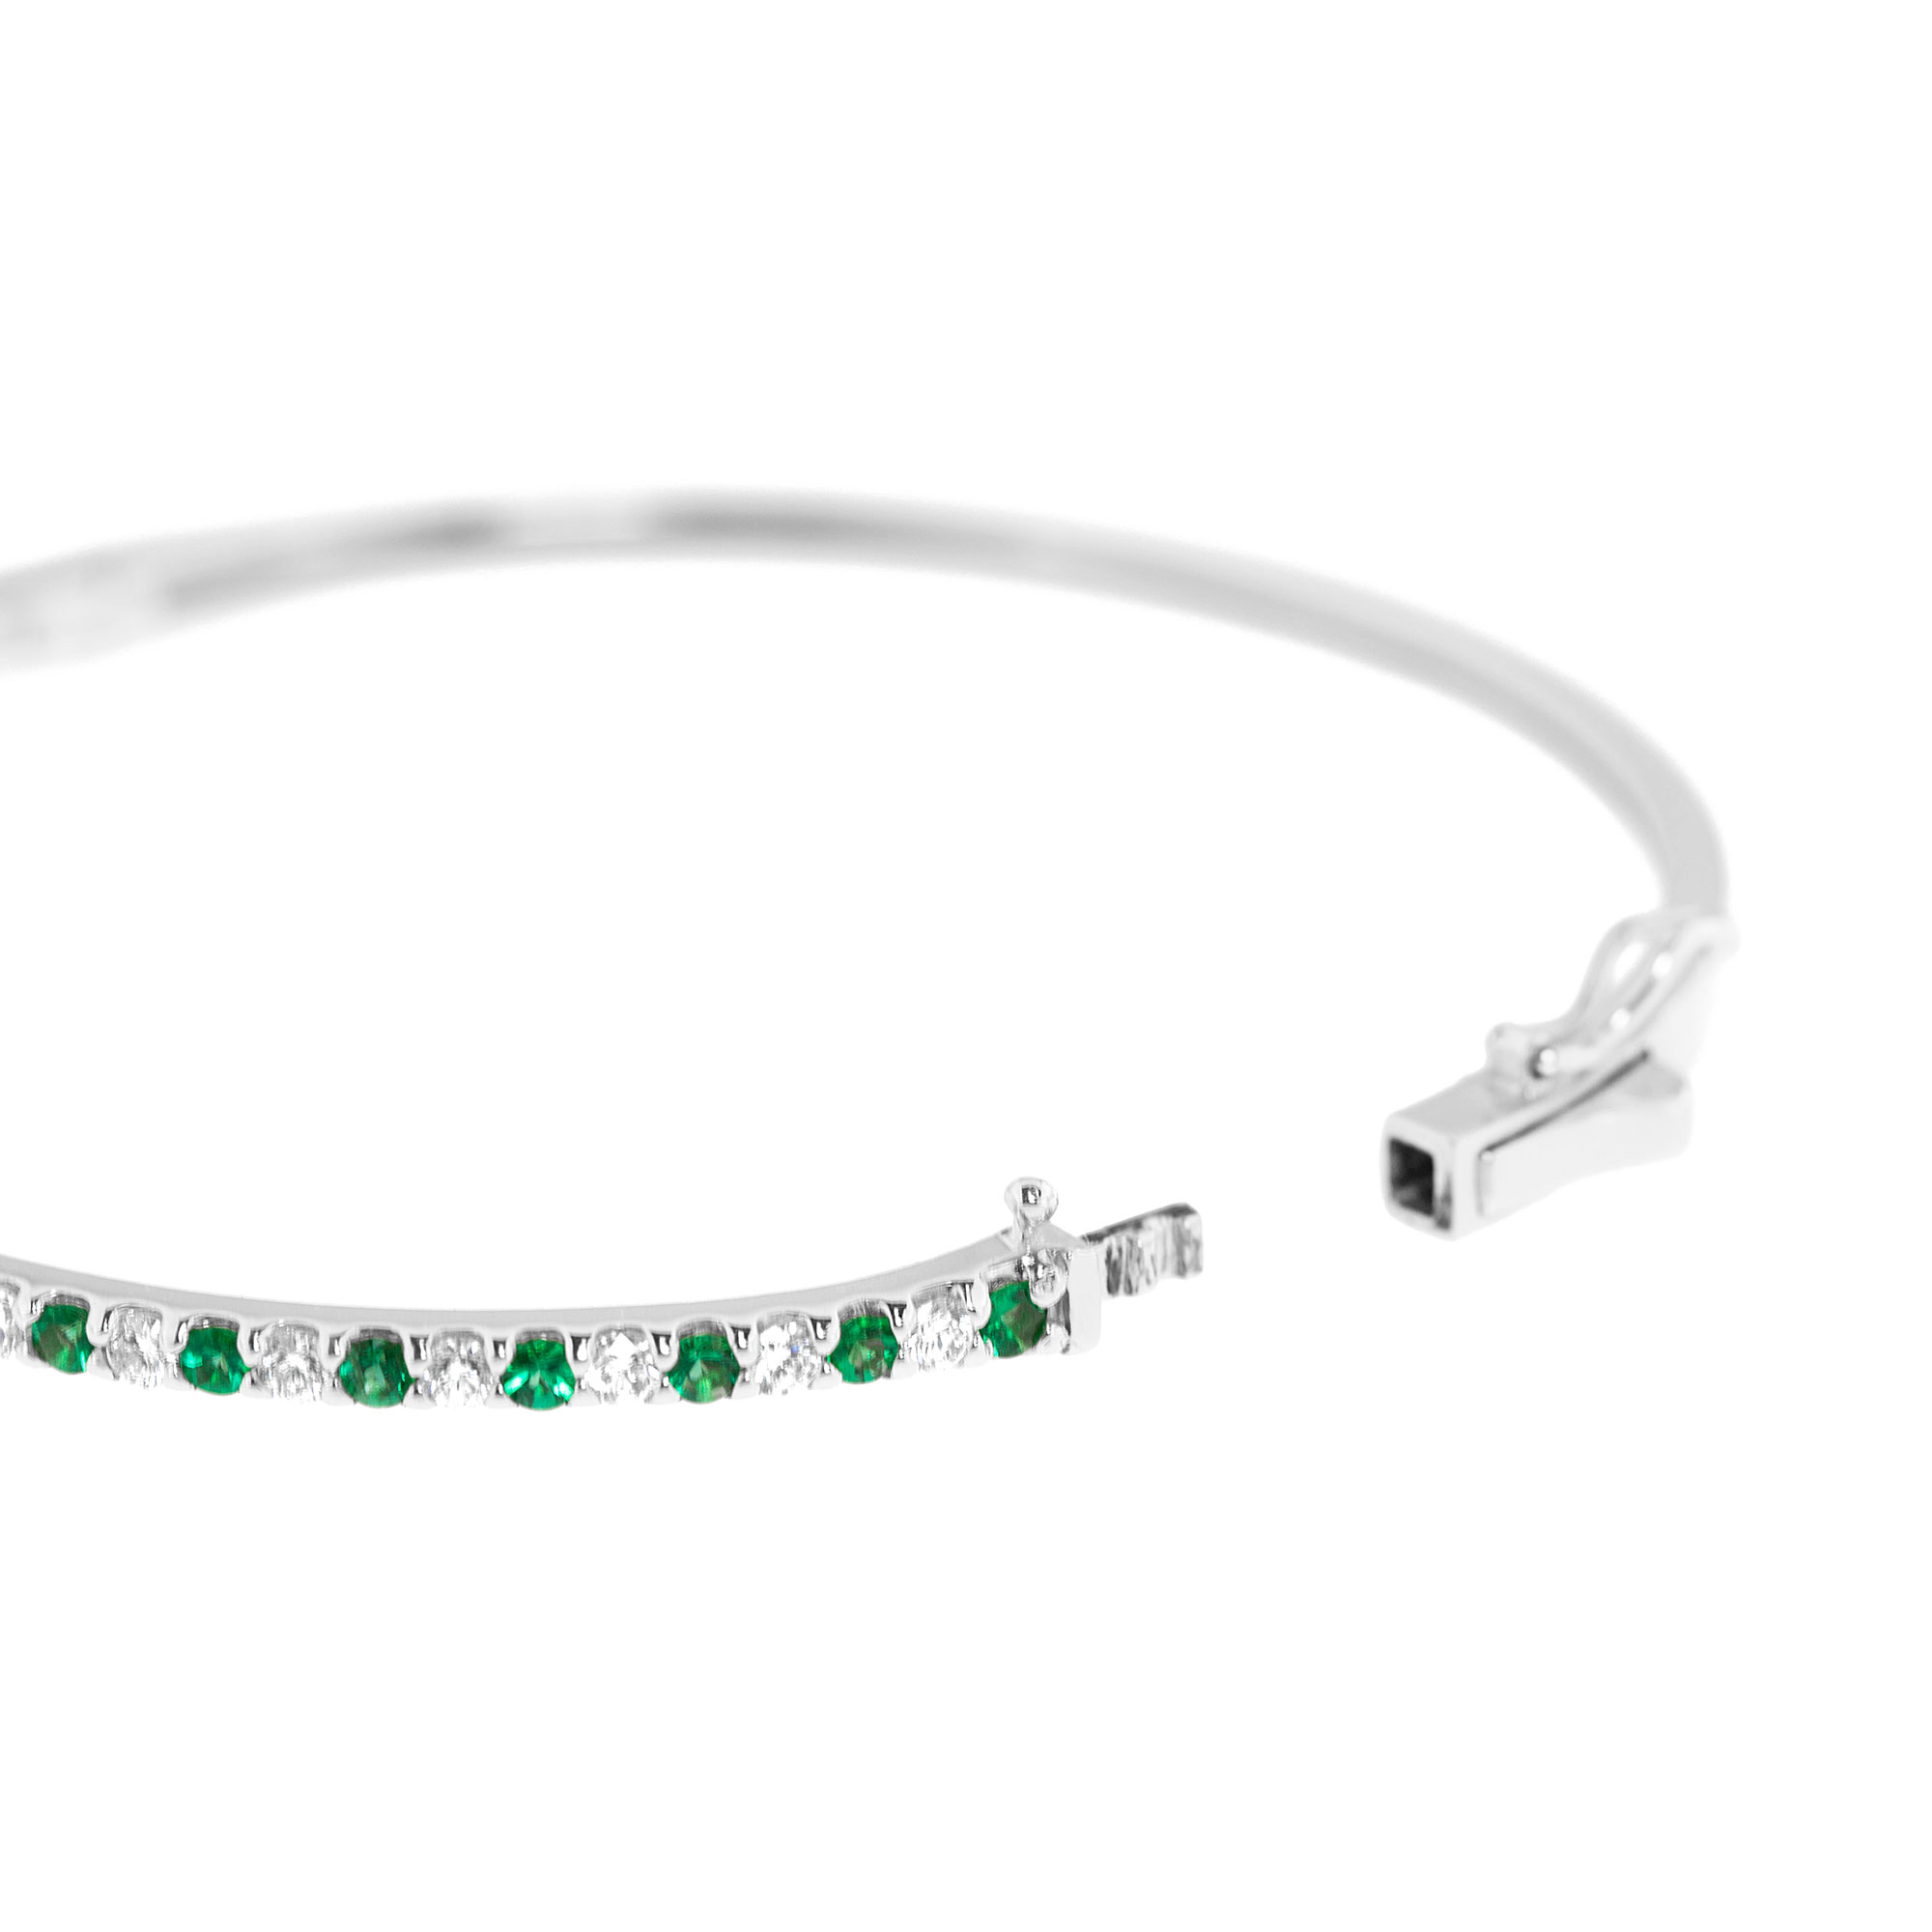 Stunning diamond & emerald ladies 18ct gold bracelet - ITEMS OF BEAUTY